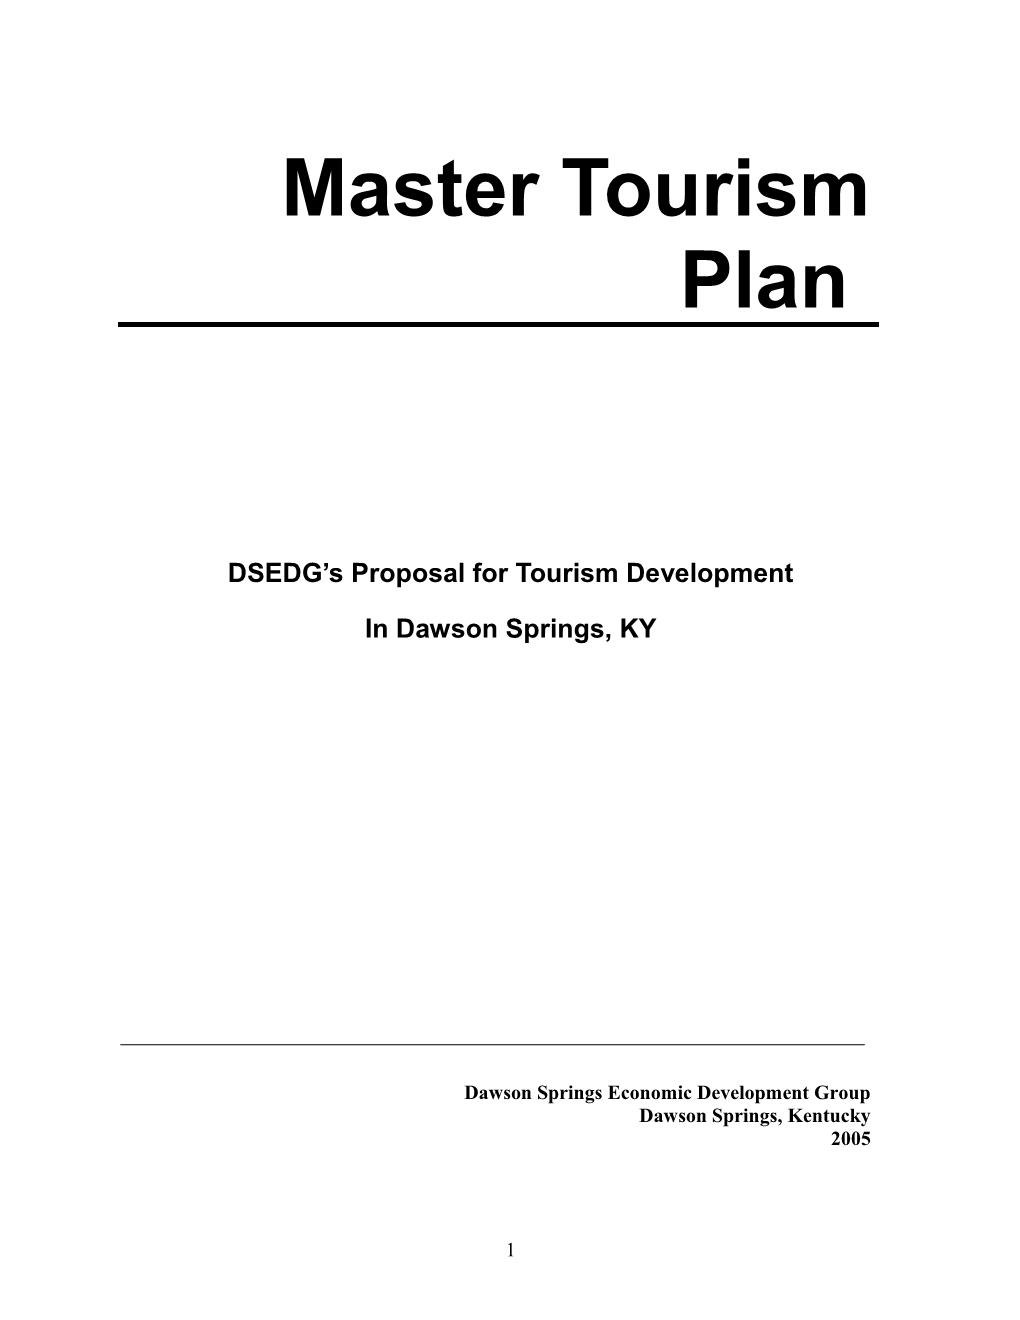 Master Tourism Plan Development